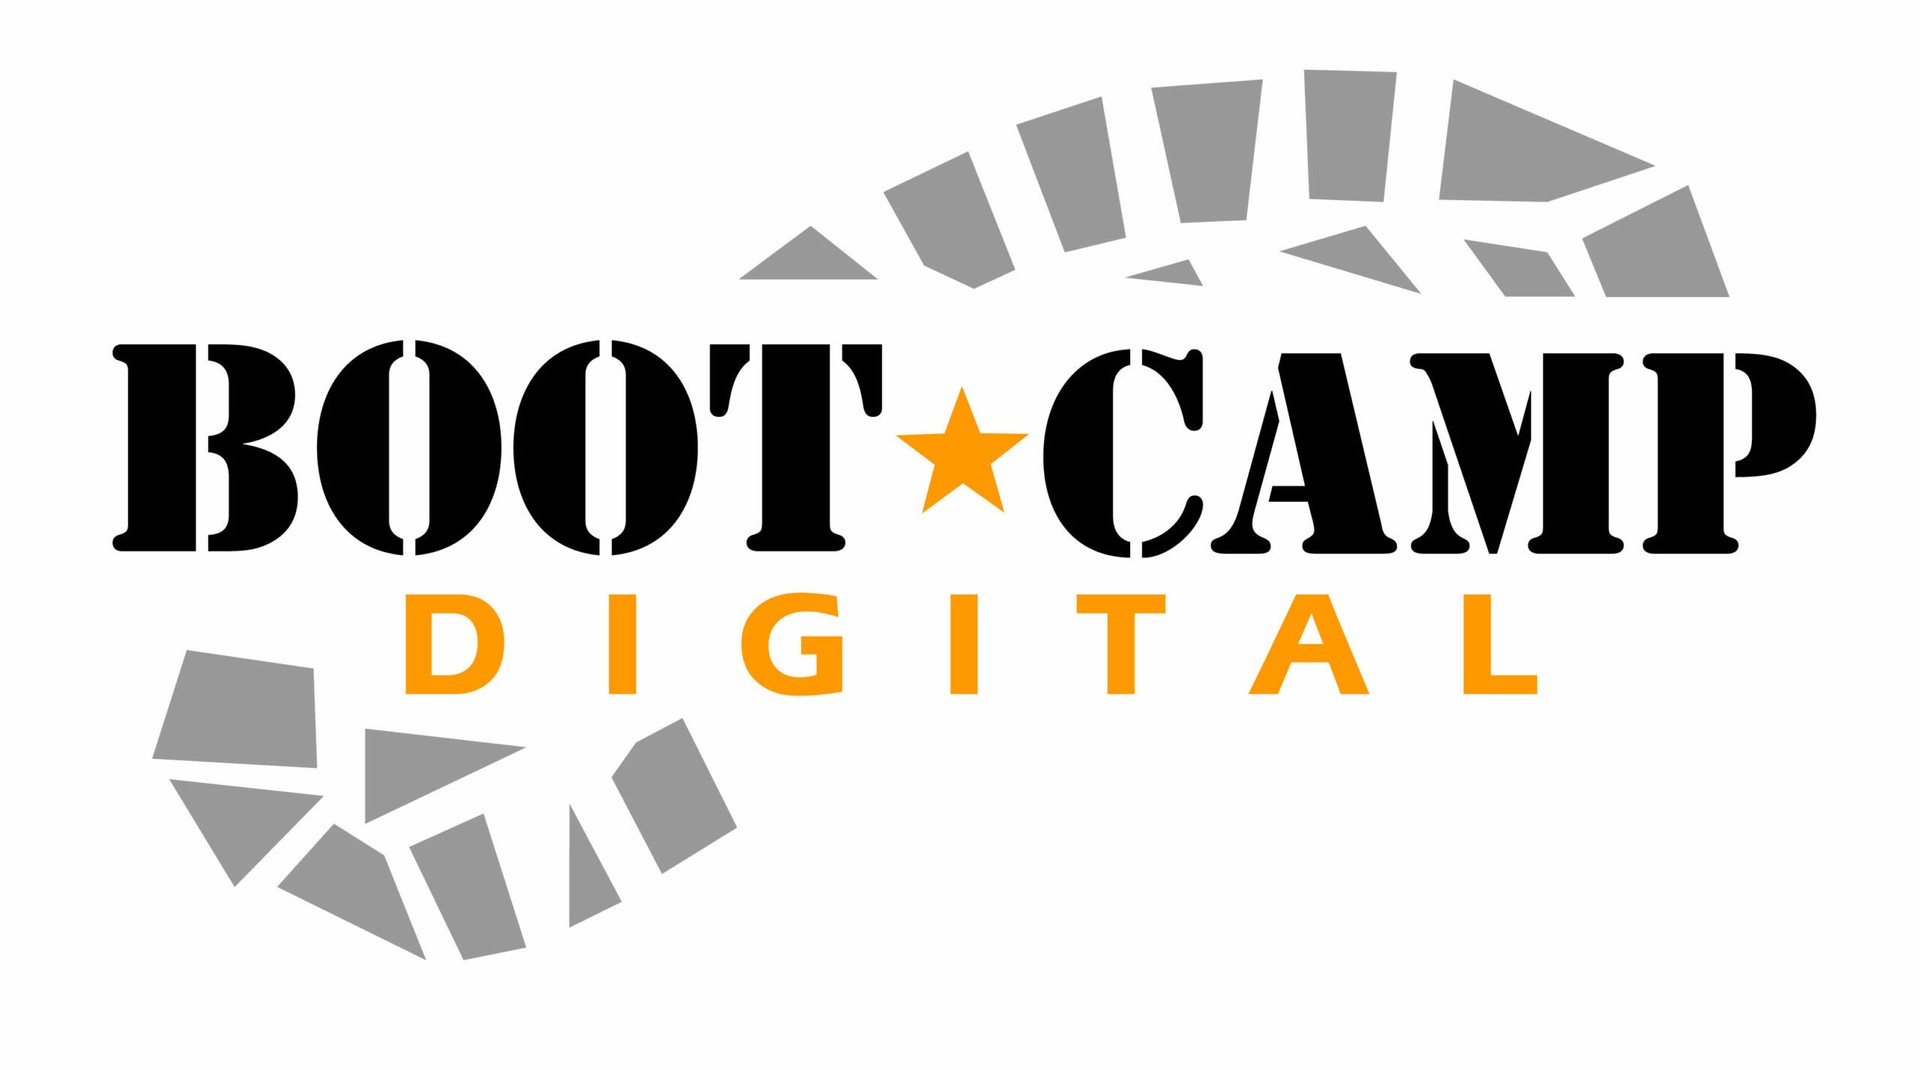 Digital marketing courses in Nigeria - Bootcamp logo